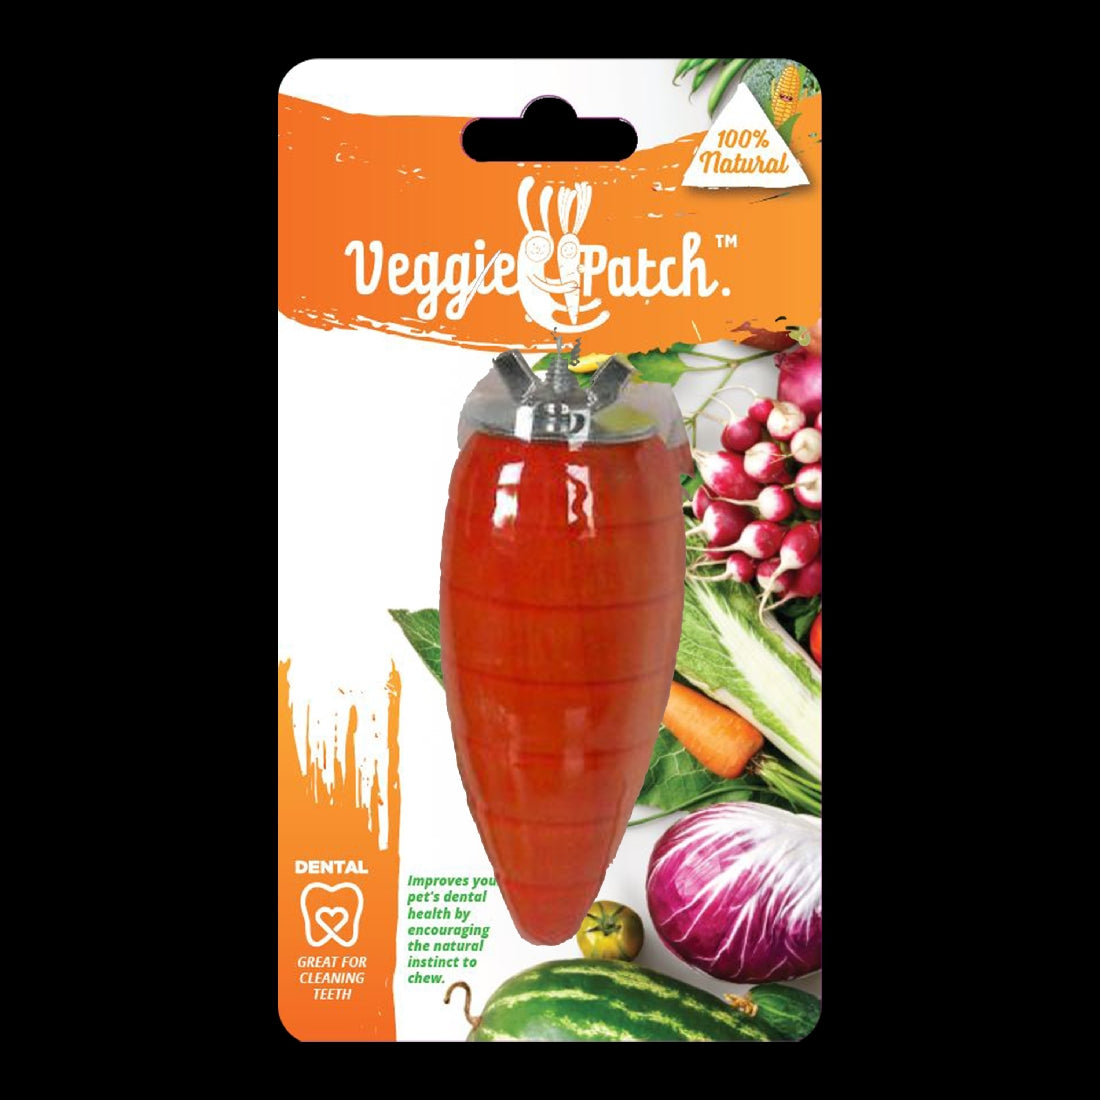 Veggie Patch Carrot Chew